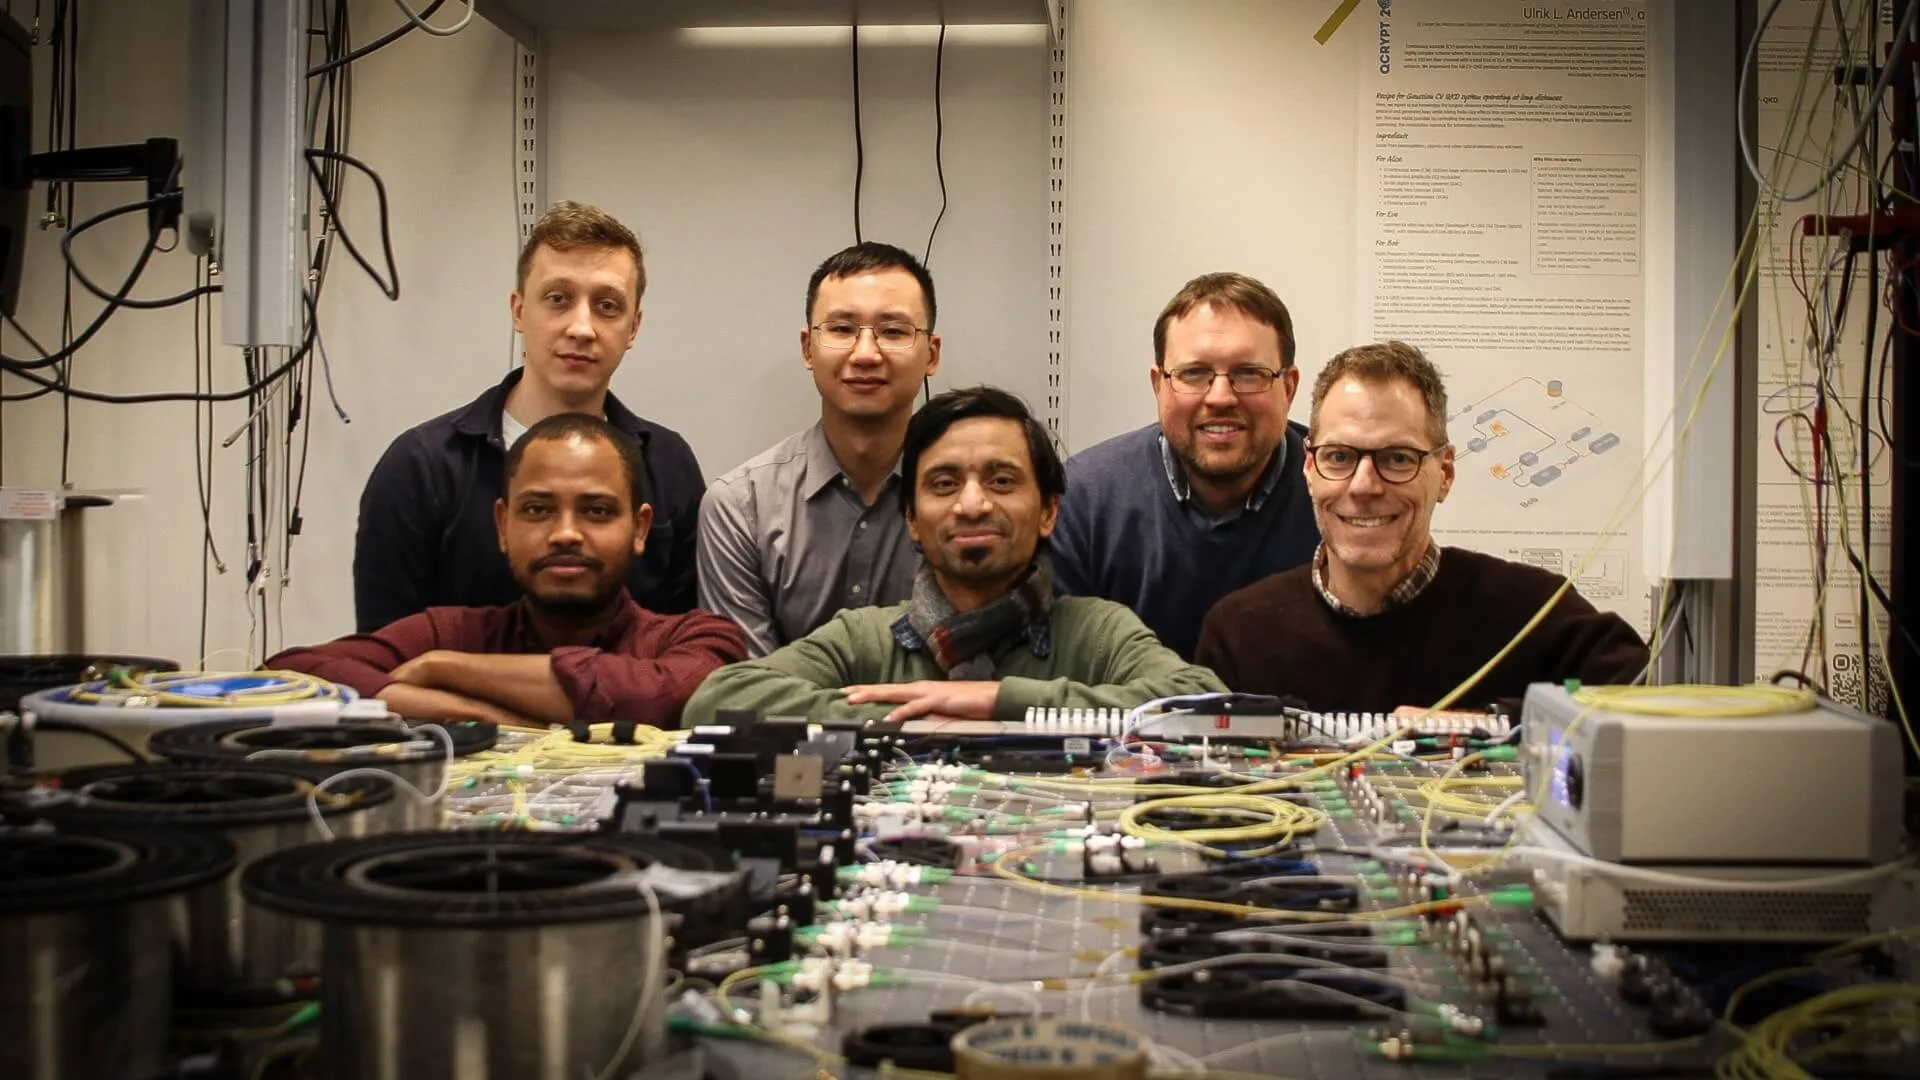 Dtu Researchers Achieve Record 100Km Quantum-Encrypted Data Transfer, Bolstering Internet Security